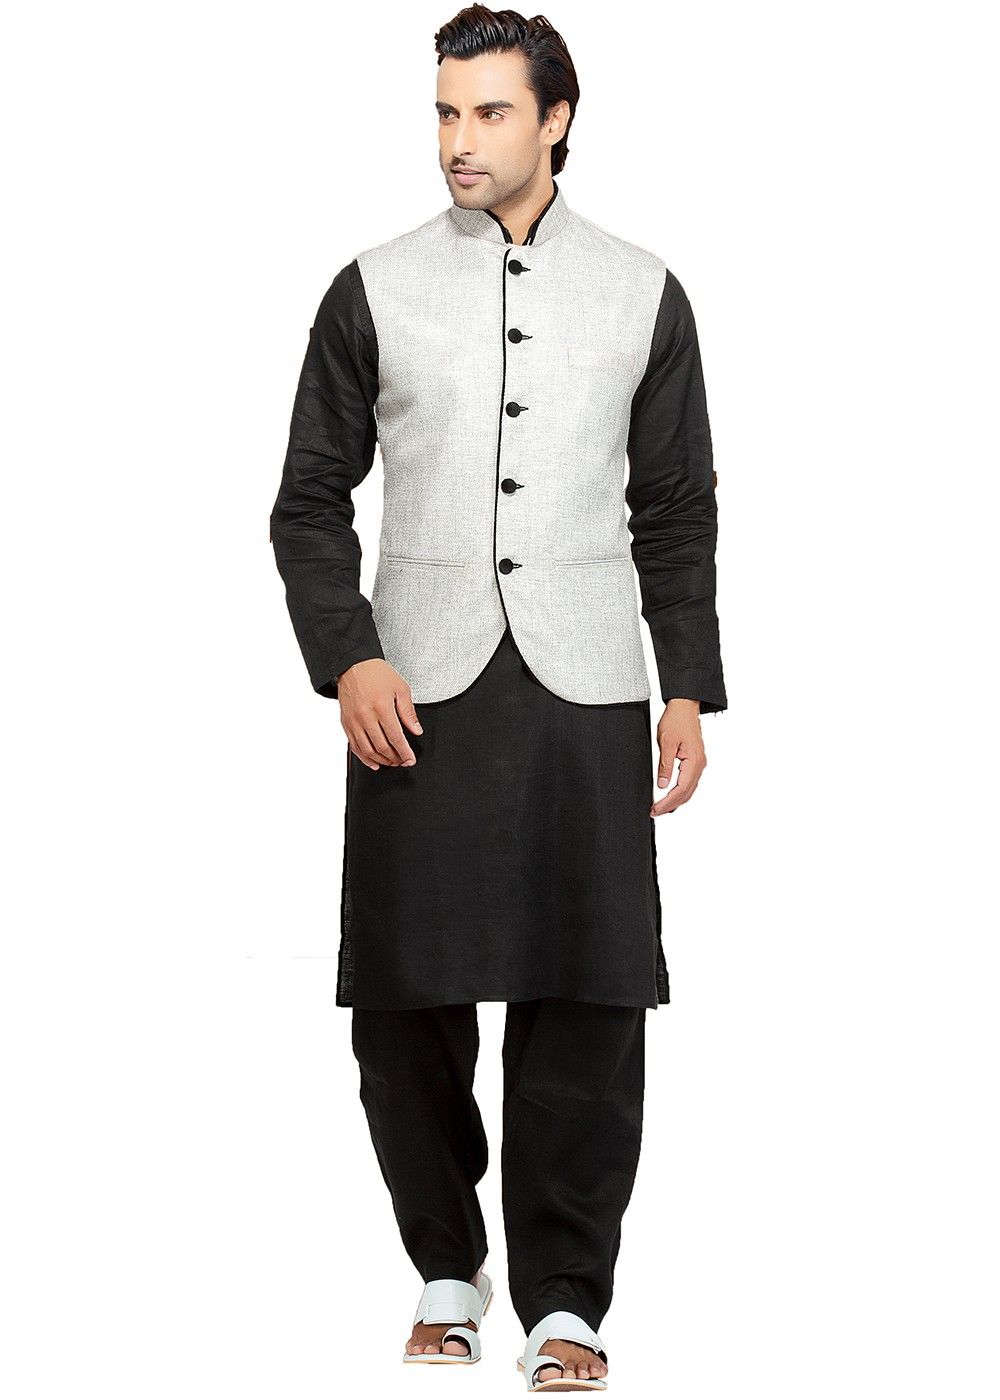 Top Pathani Suit Wholesalers in Dwarka, Delhi - पठानी सूट व्होलेसलेर्स,  द्वारका , दिल्ली - Justdial